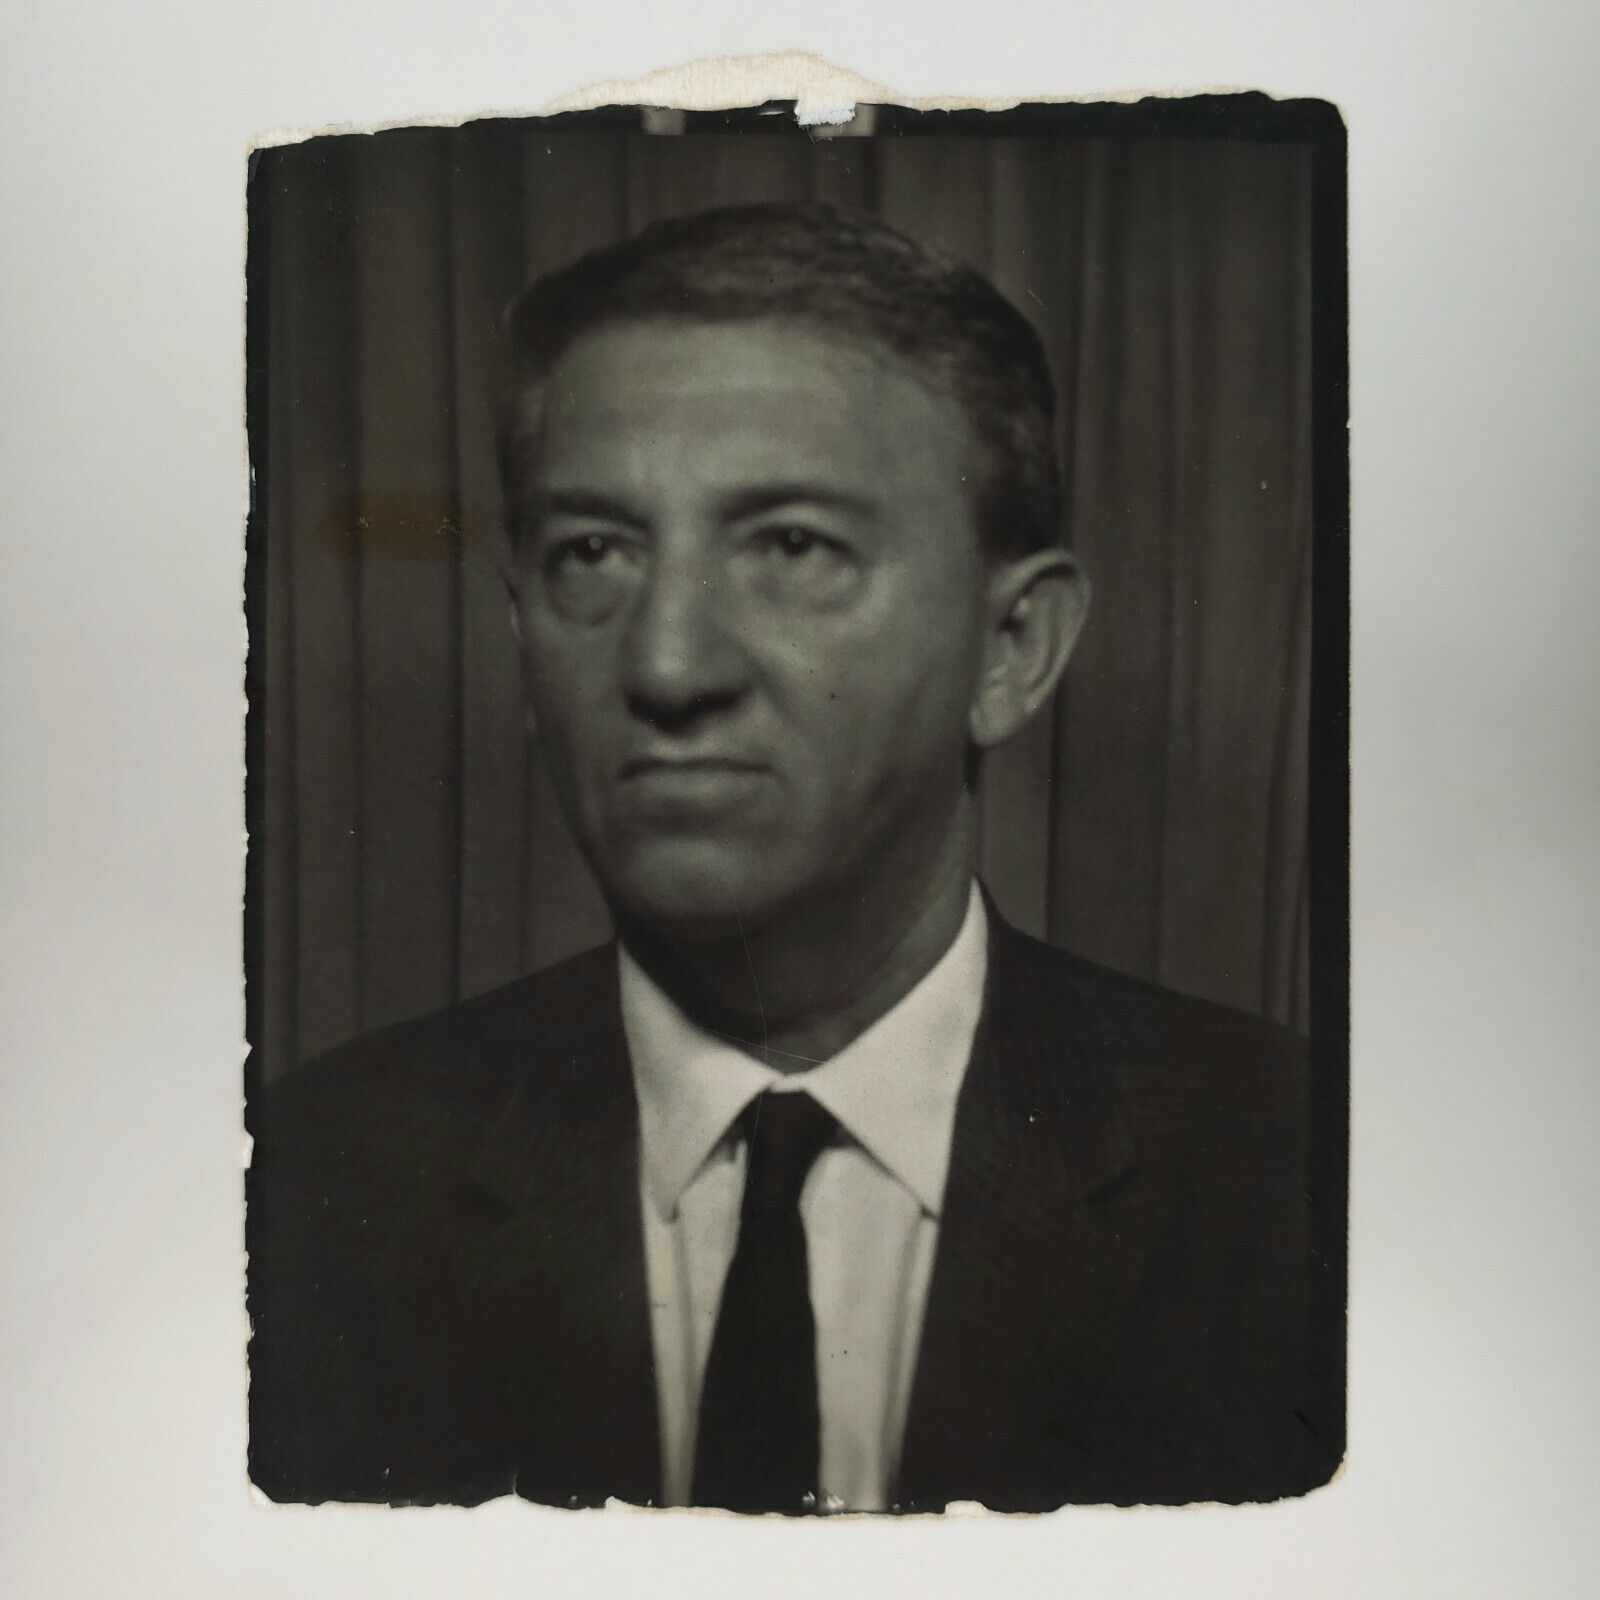 Pursed Lips Old Guy Photobooth Portrait 1940s Business Suit Necktie Photo A3079